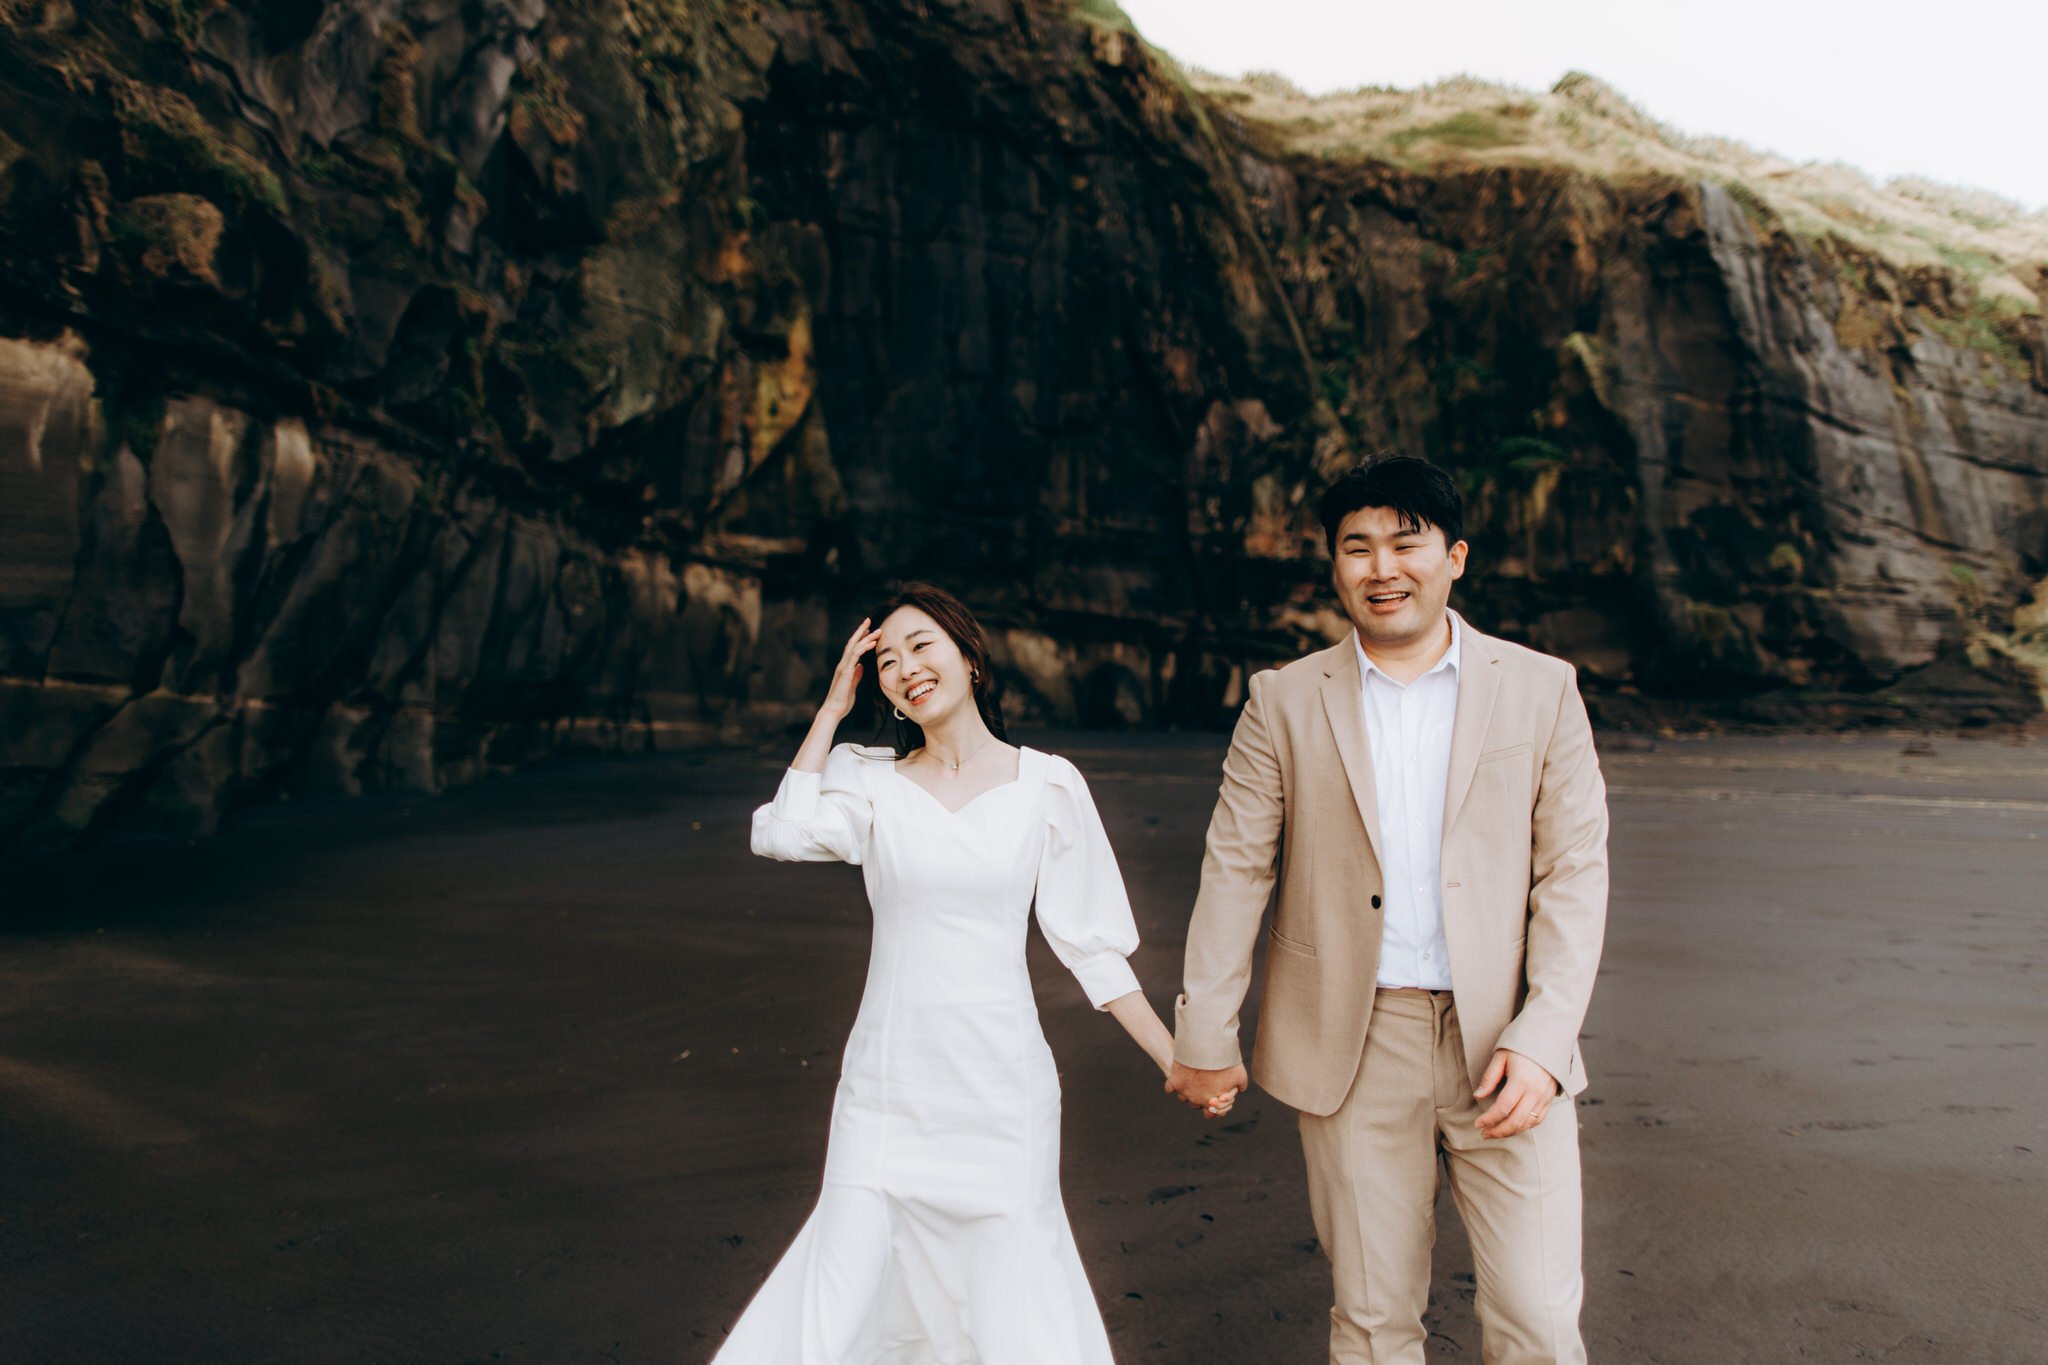 muriwai beach Korean prewedding photoshoot auckland wedding photographer 44.jpg